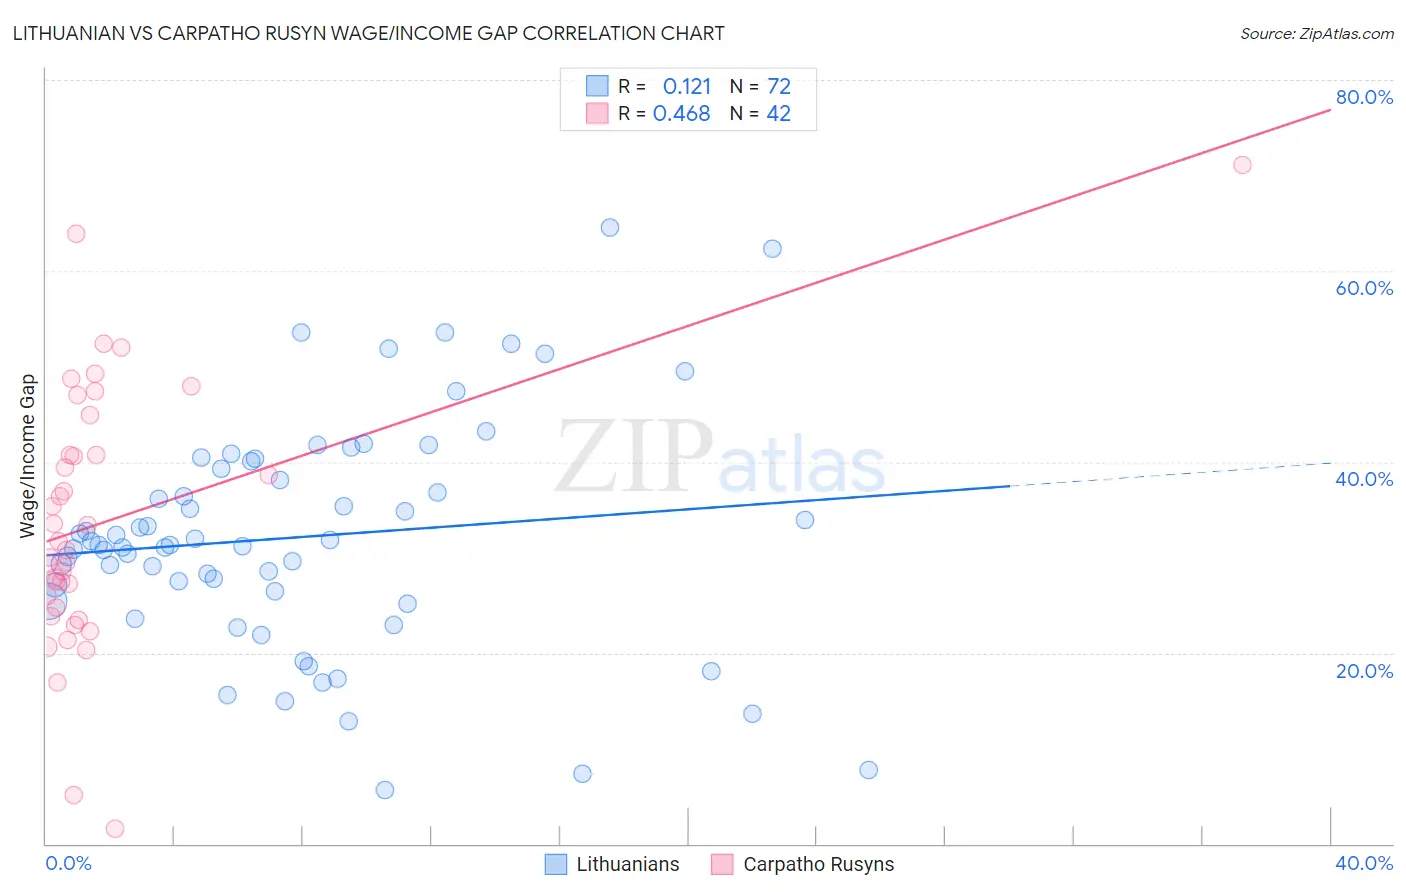 Lithuanian vs Carpatho Rusyn Wage/Income Gap